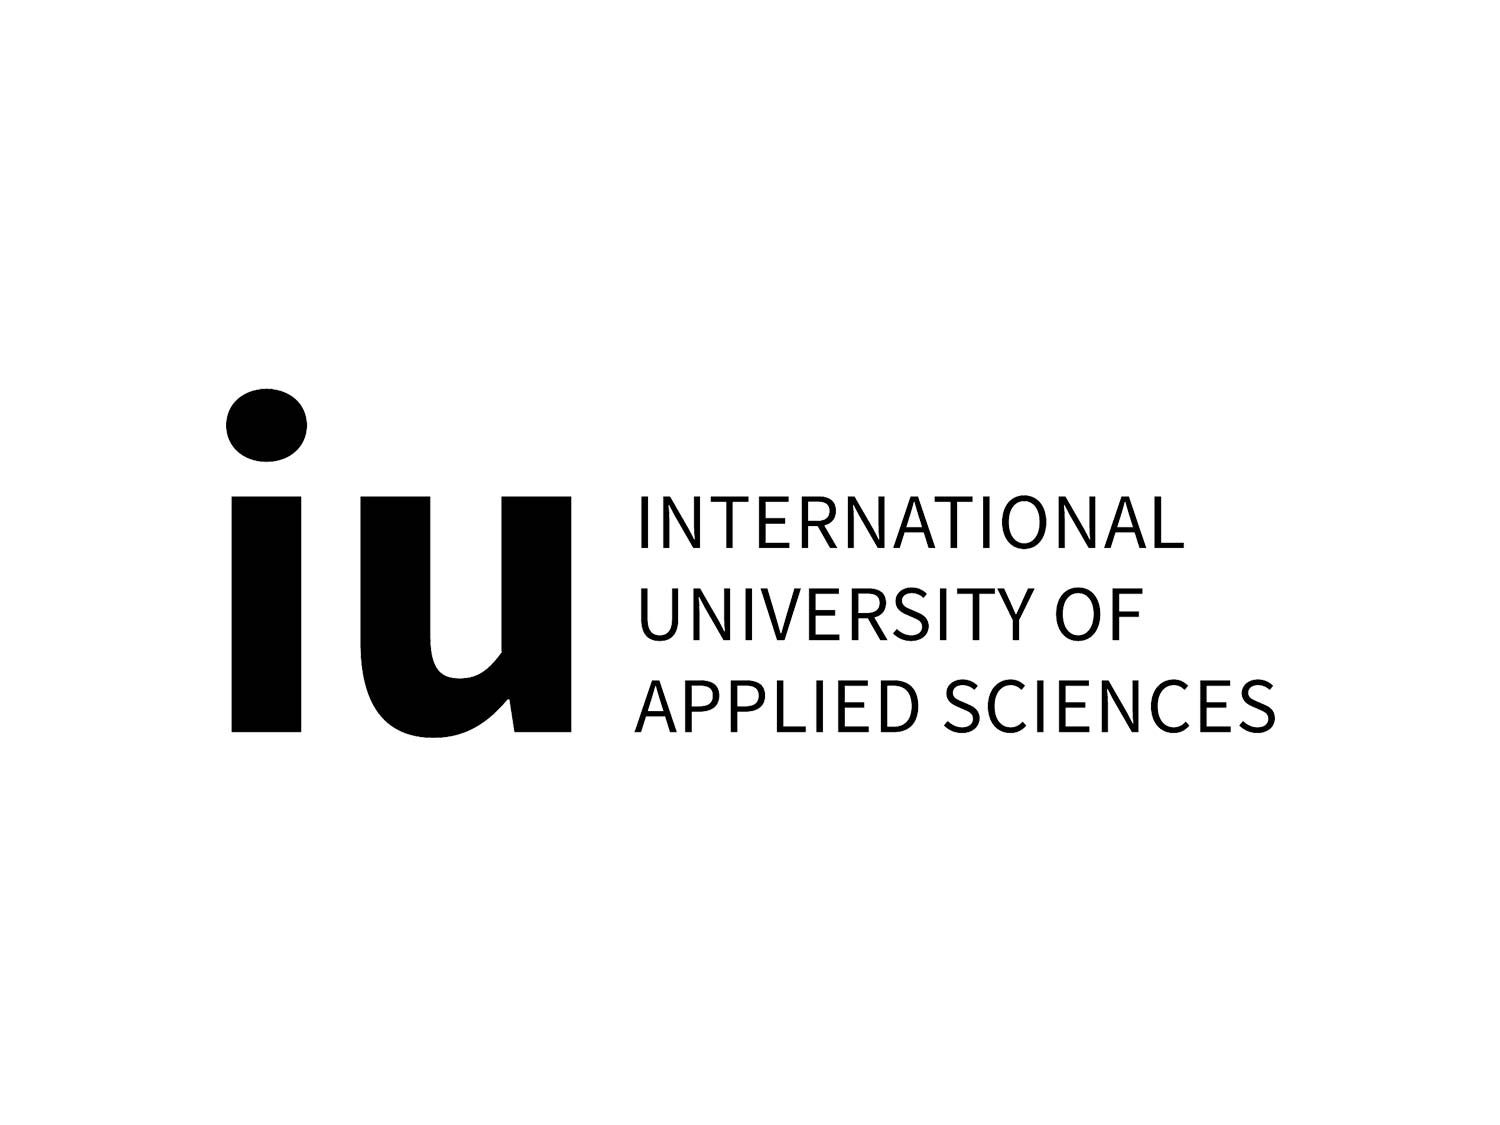 International University of applied sciences